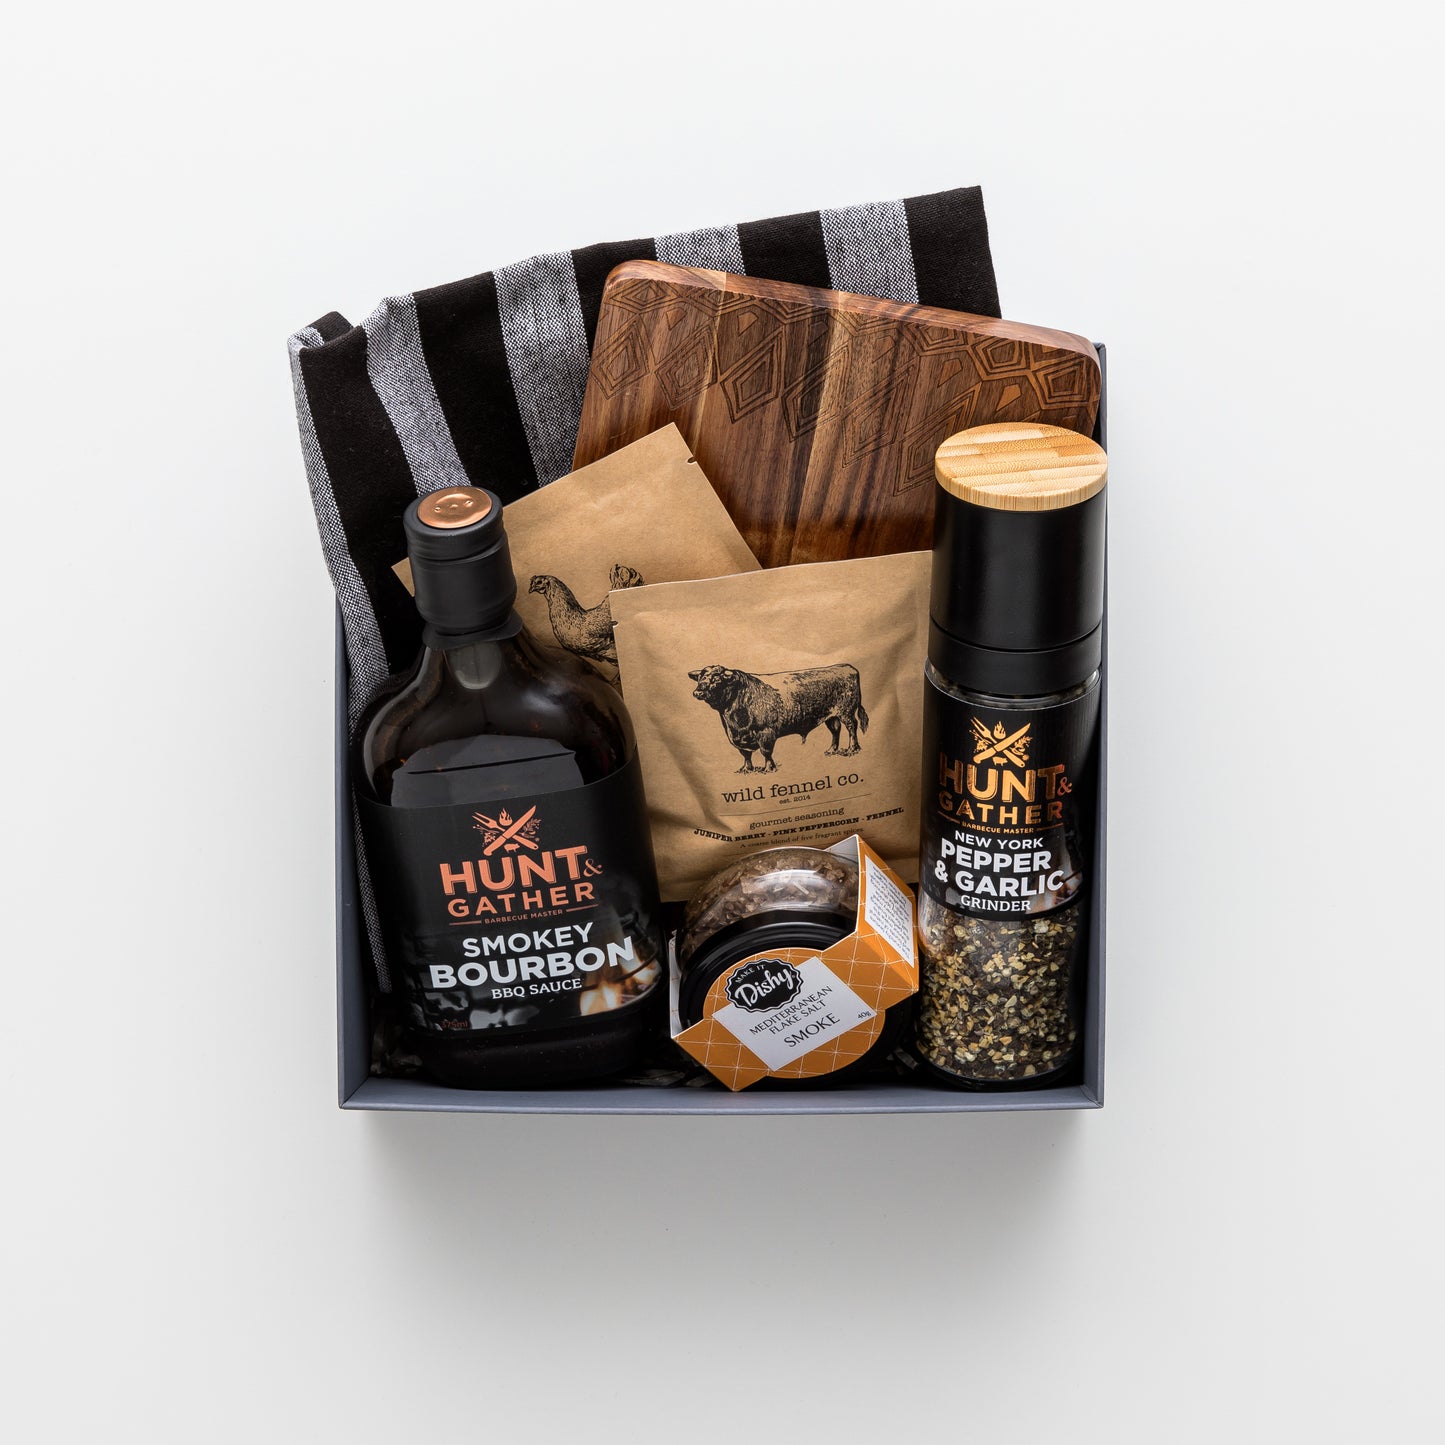 Gift box contains wooden board, pepper grinder, salt, seasoning, bourbon sauce, tea towel.